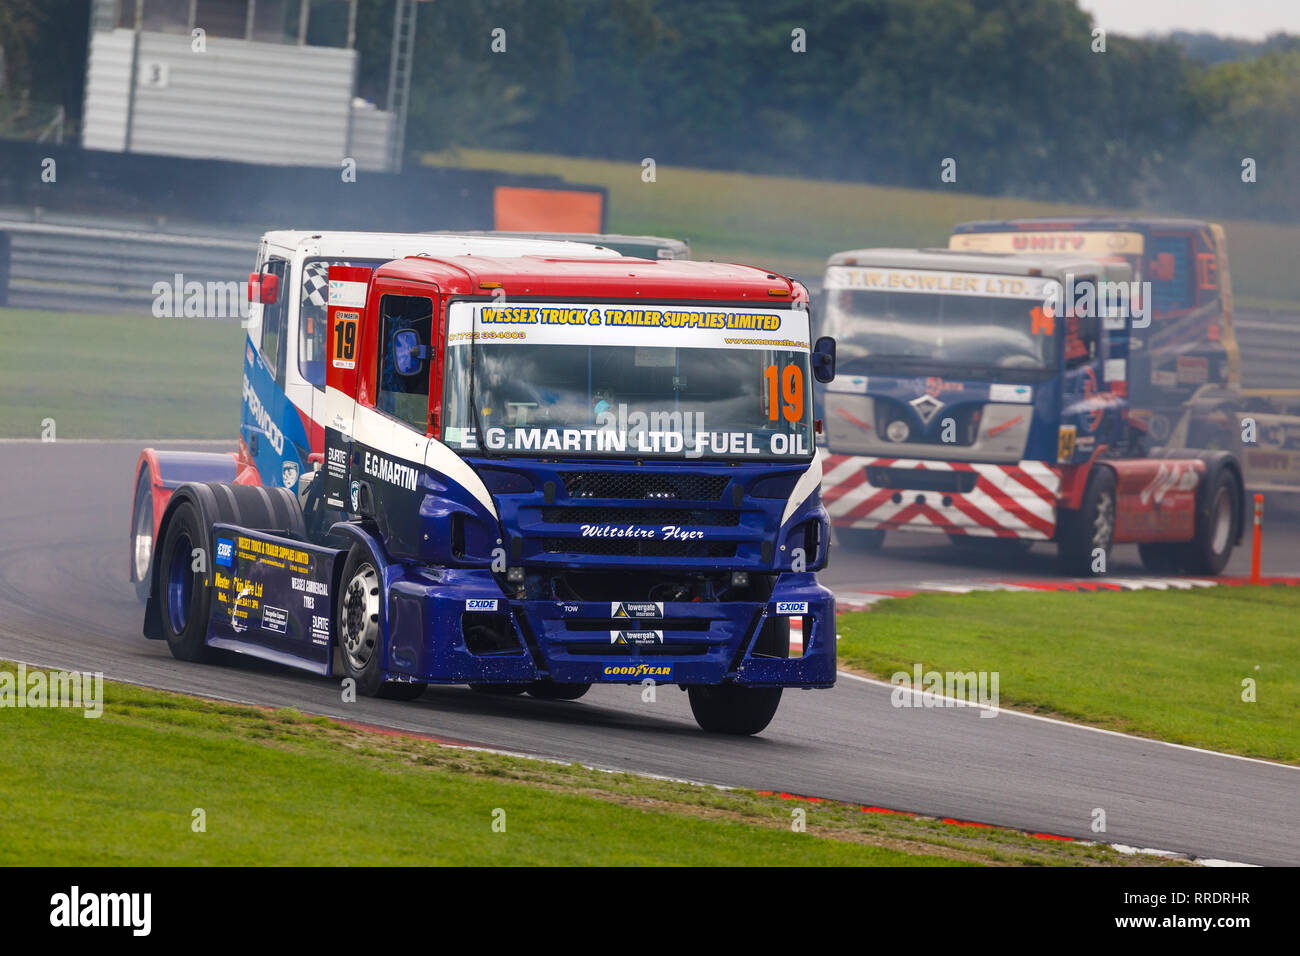 Trevor Martin in the Scania P Series, Division 2, Championship truck race at Snetterton 2018, Norfolk, UK. Stock Photo